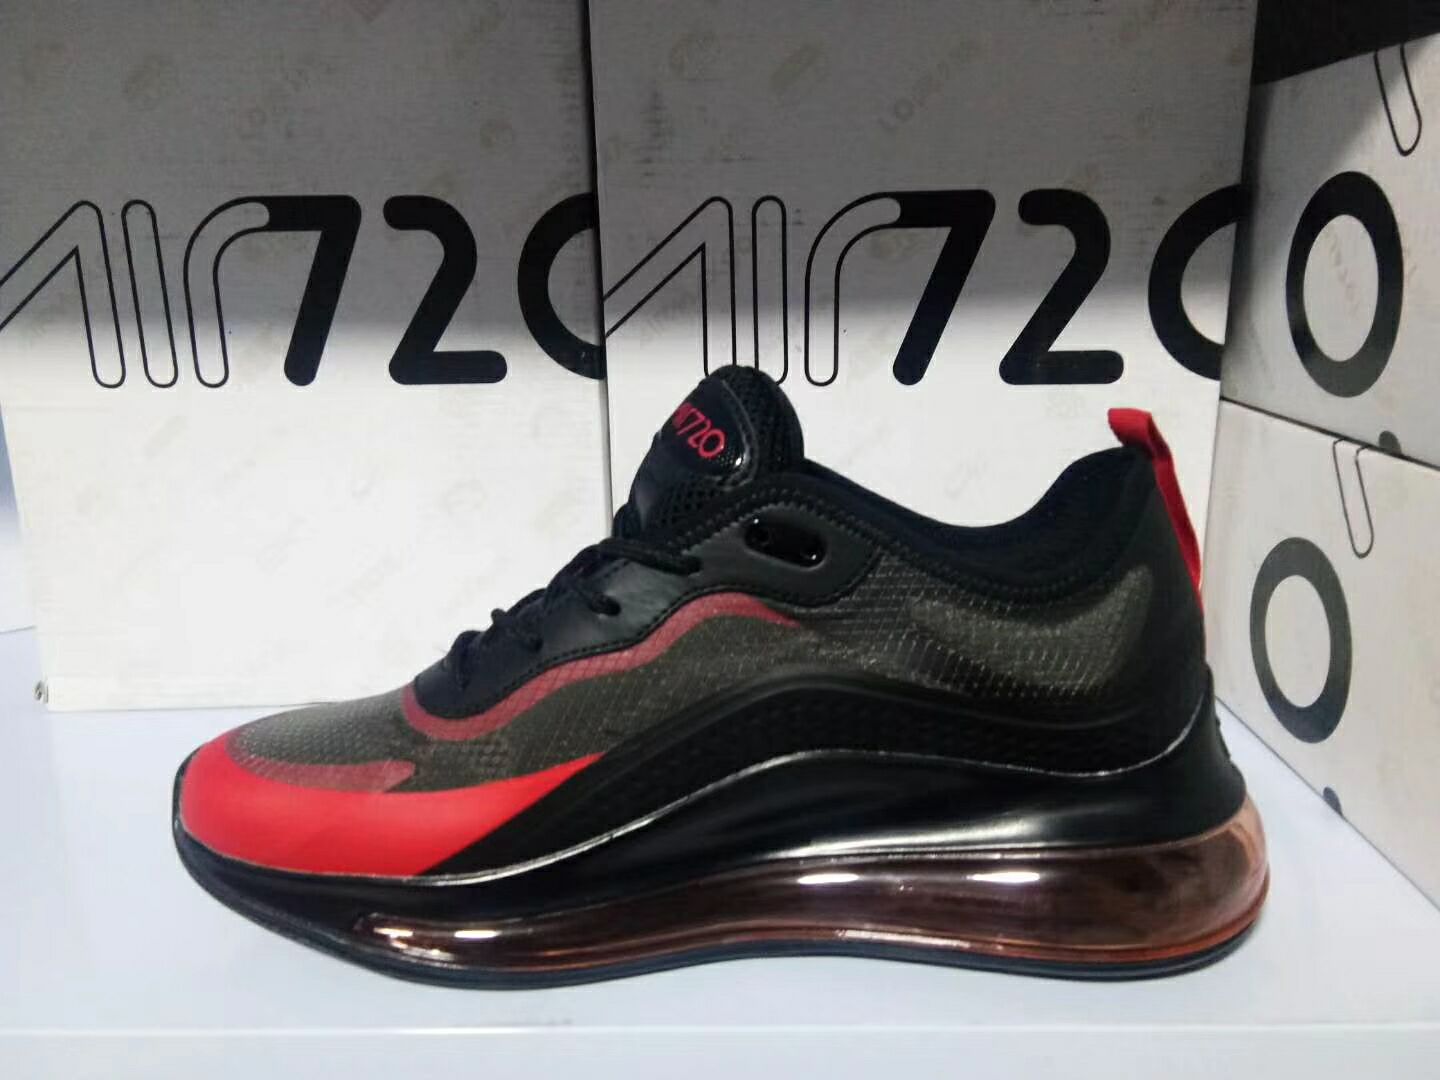 Nike Air Max 720 II Black Red Shoes